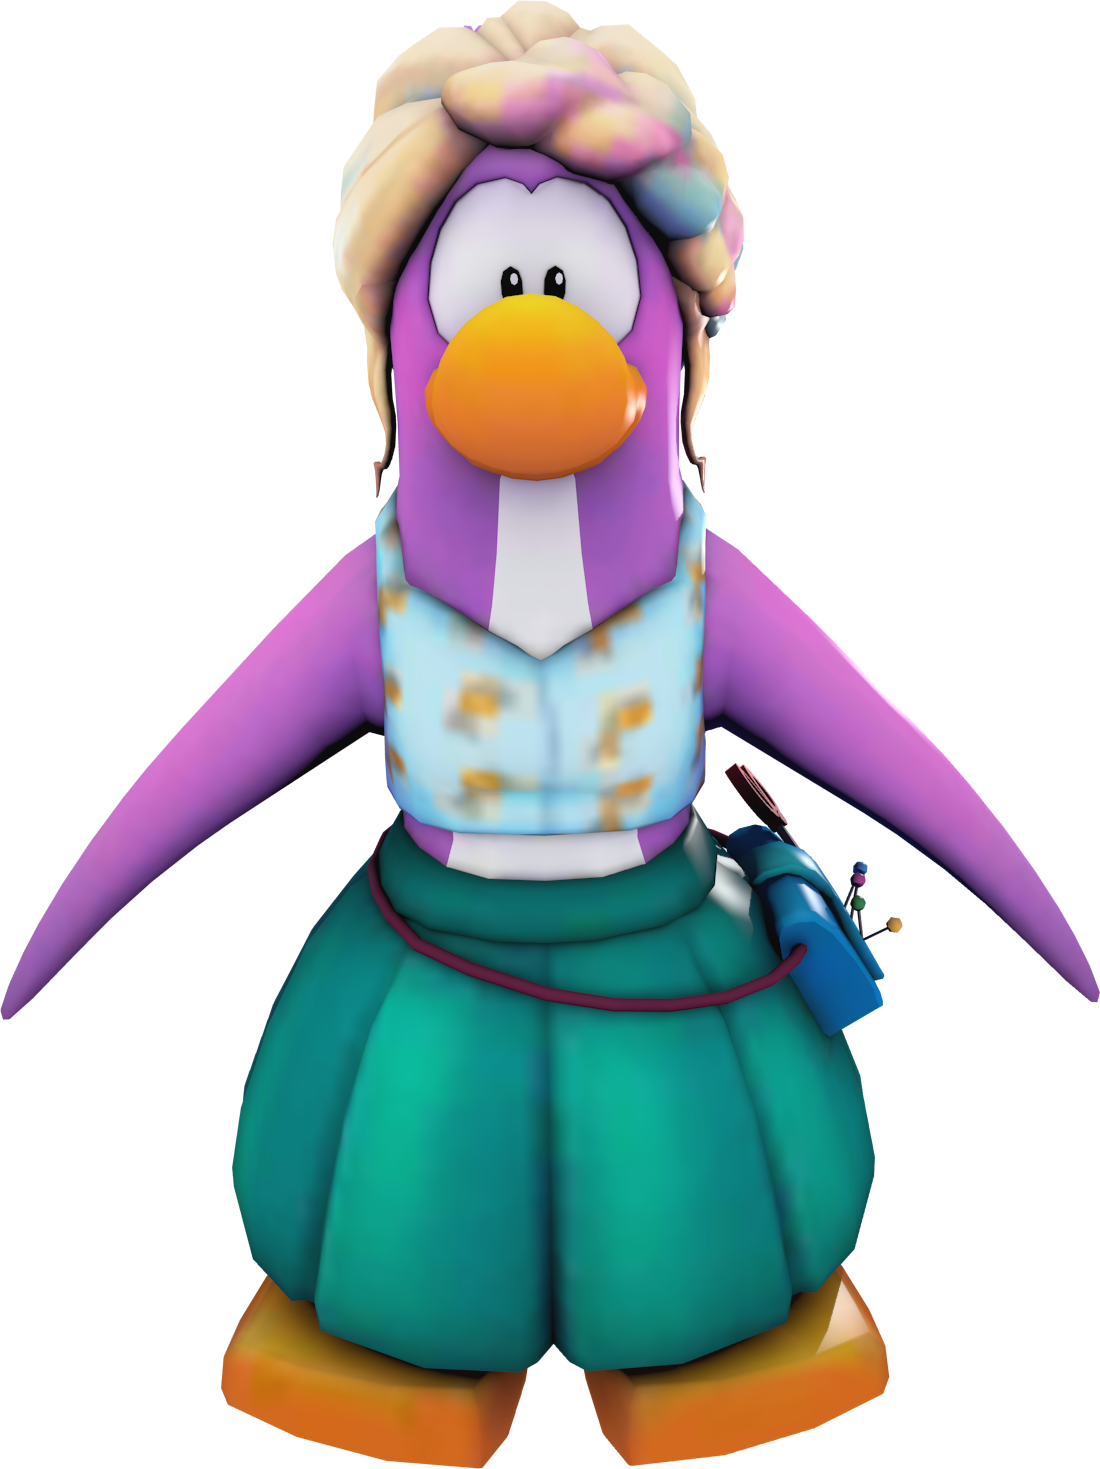 club penguin island characters